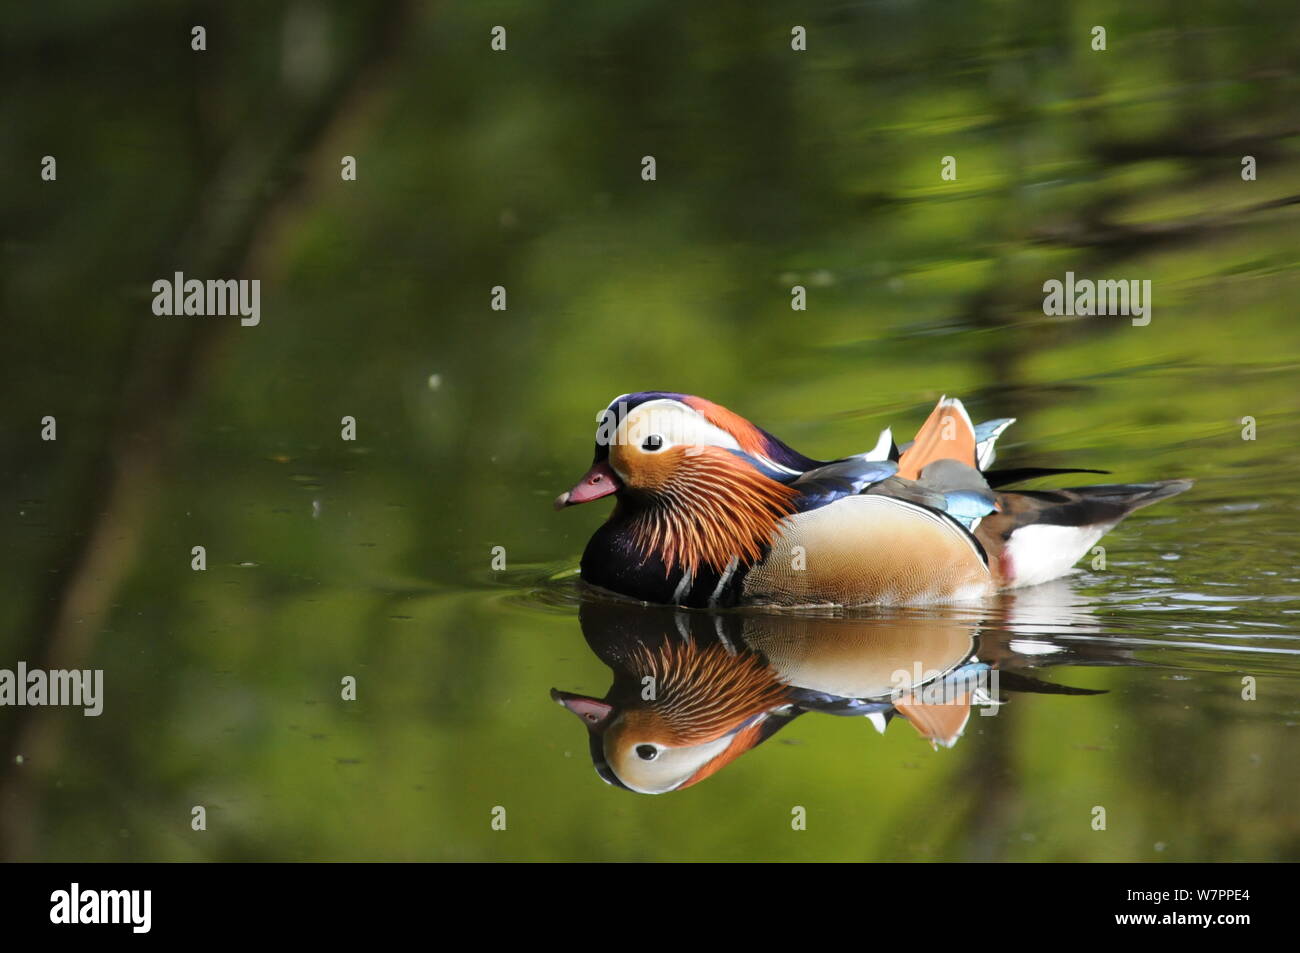 Male mandarin duck mirroring in water, swimming Stock Photo